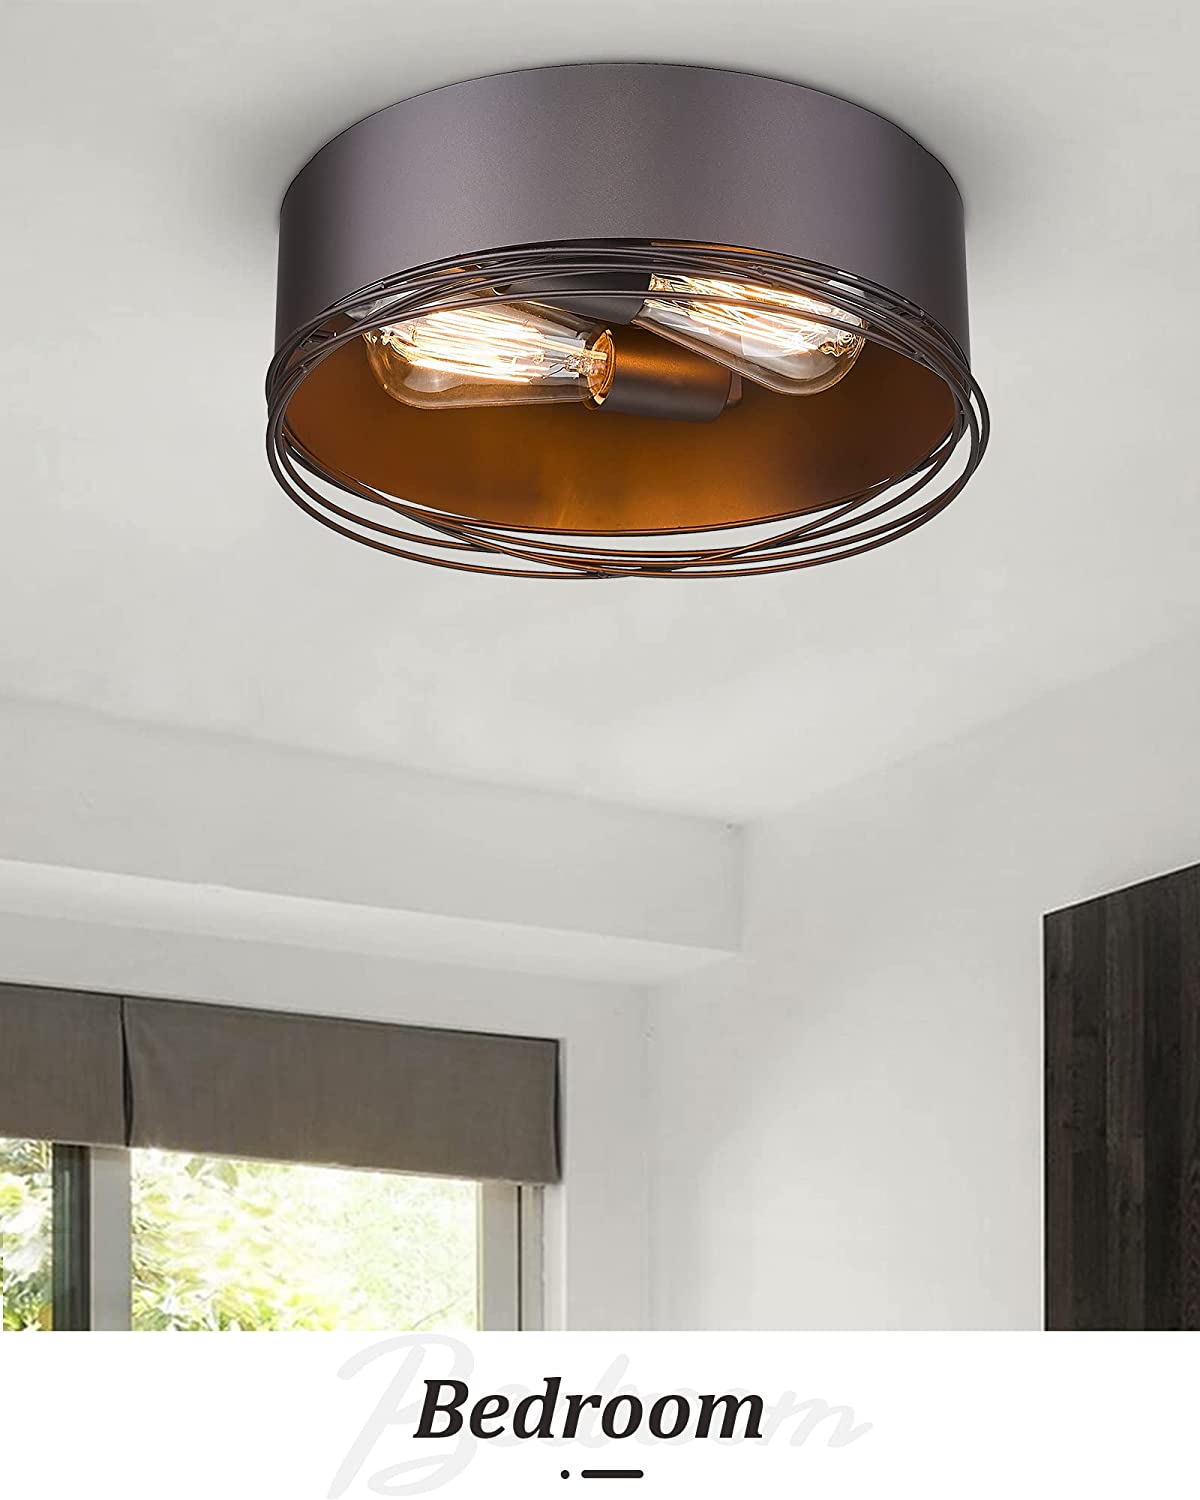 2 light industrial ceiling light fixture farmhouse flush mount ceiling lamp